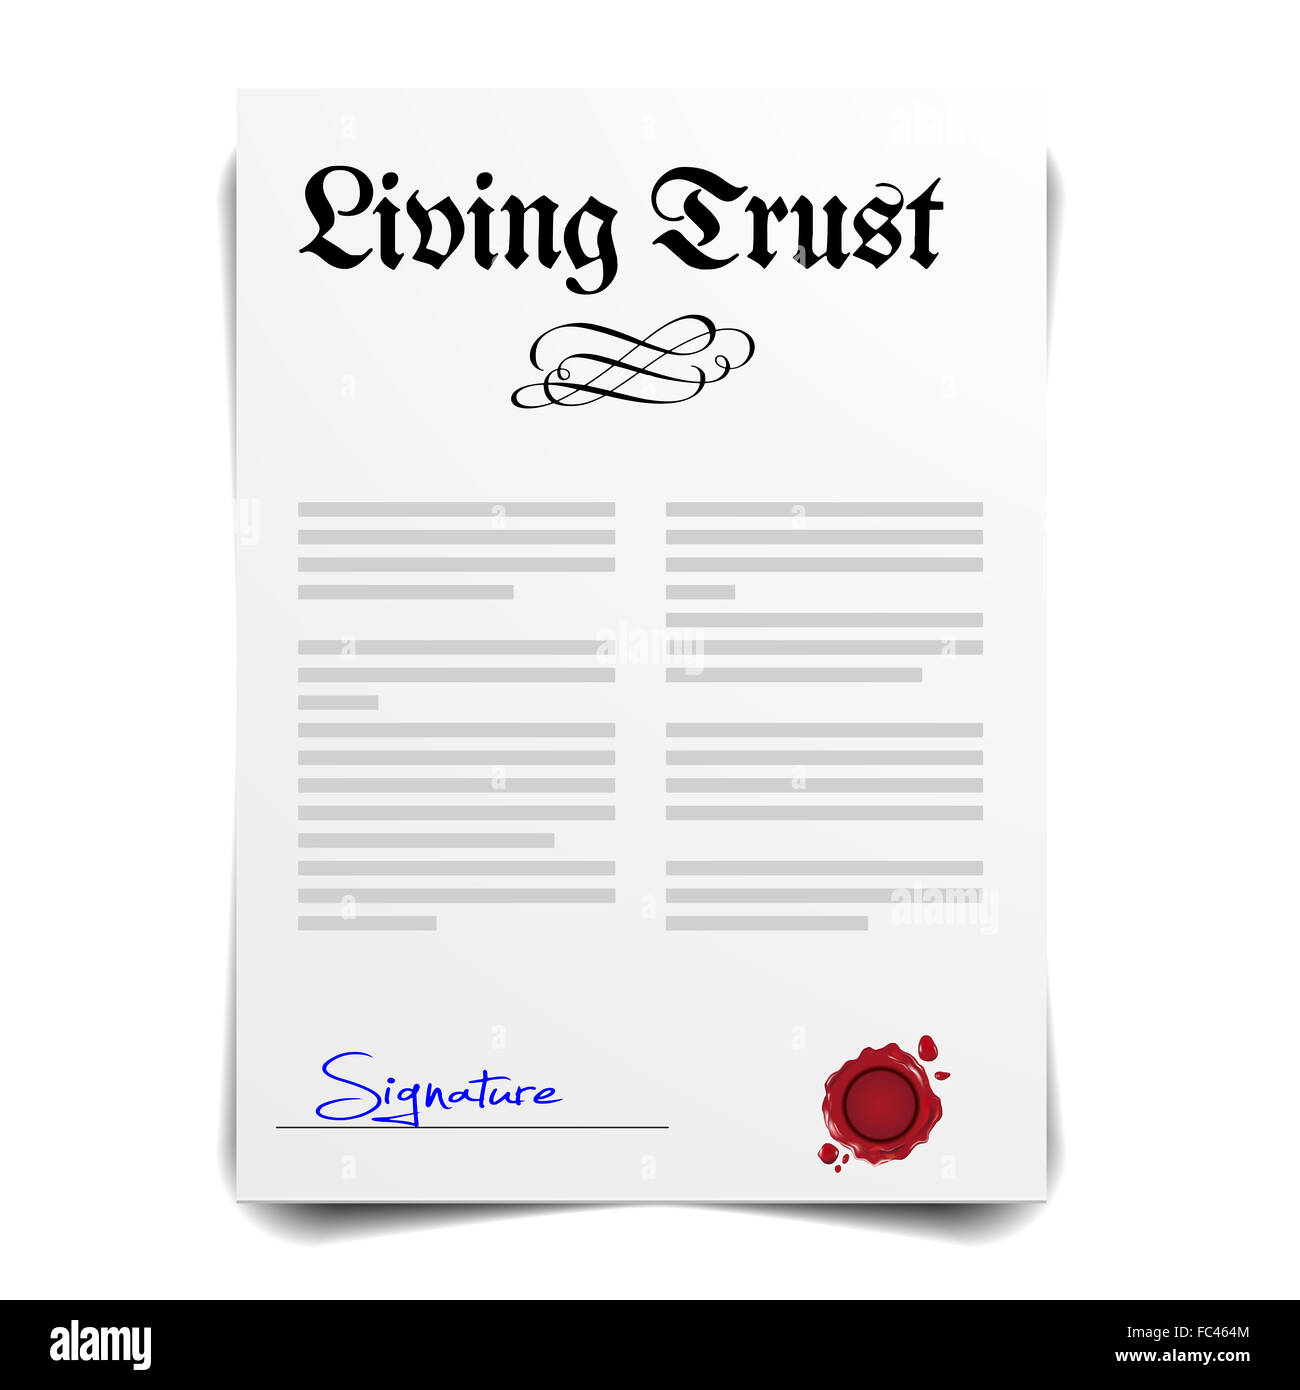 Living Trust Stock Photo